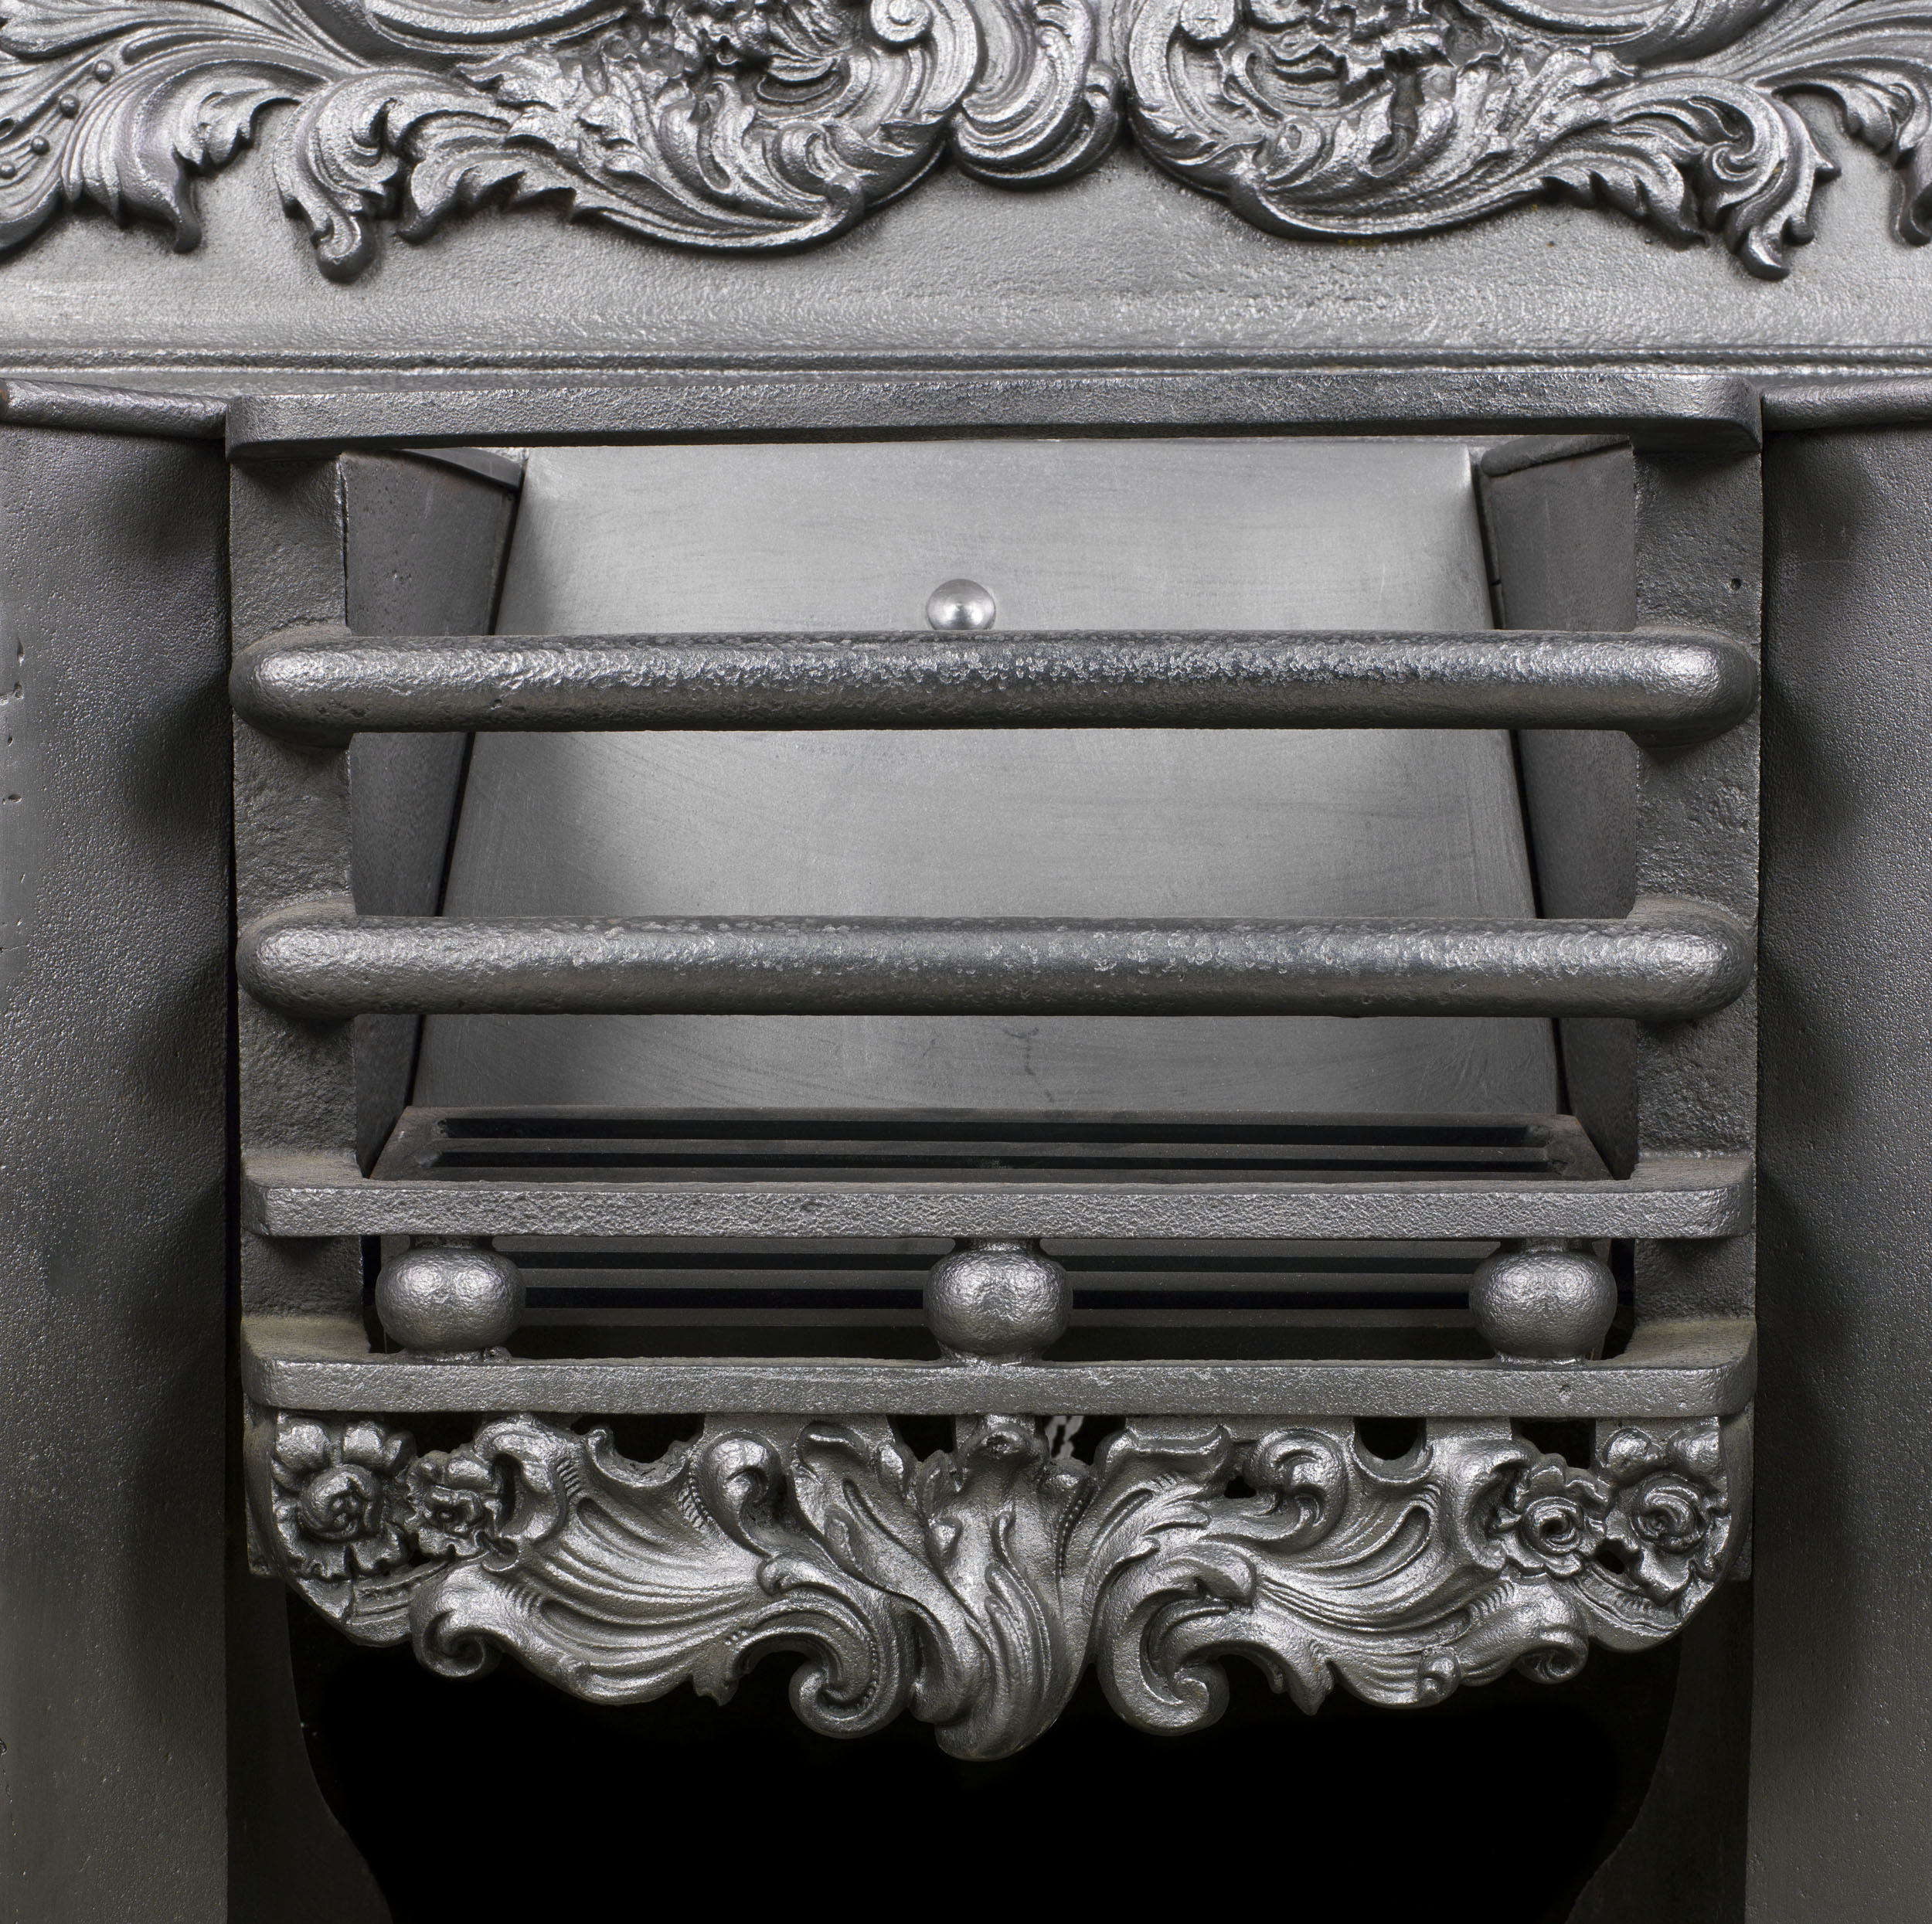 An Ornate Victorian Cast Iron Hob Grate